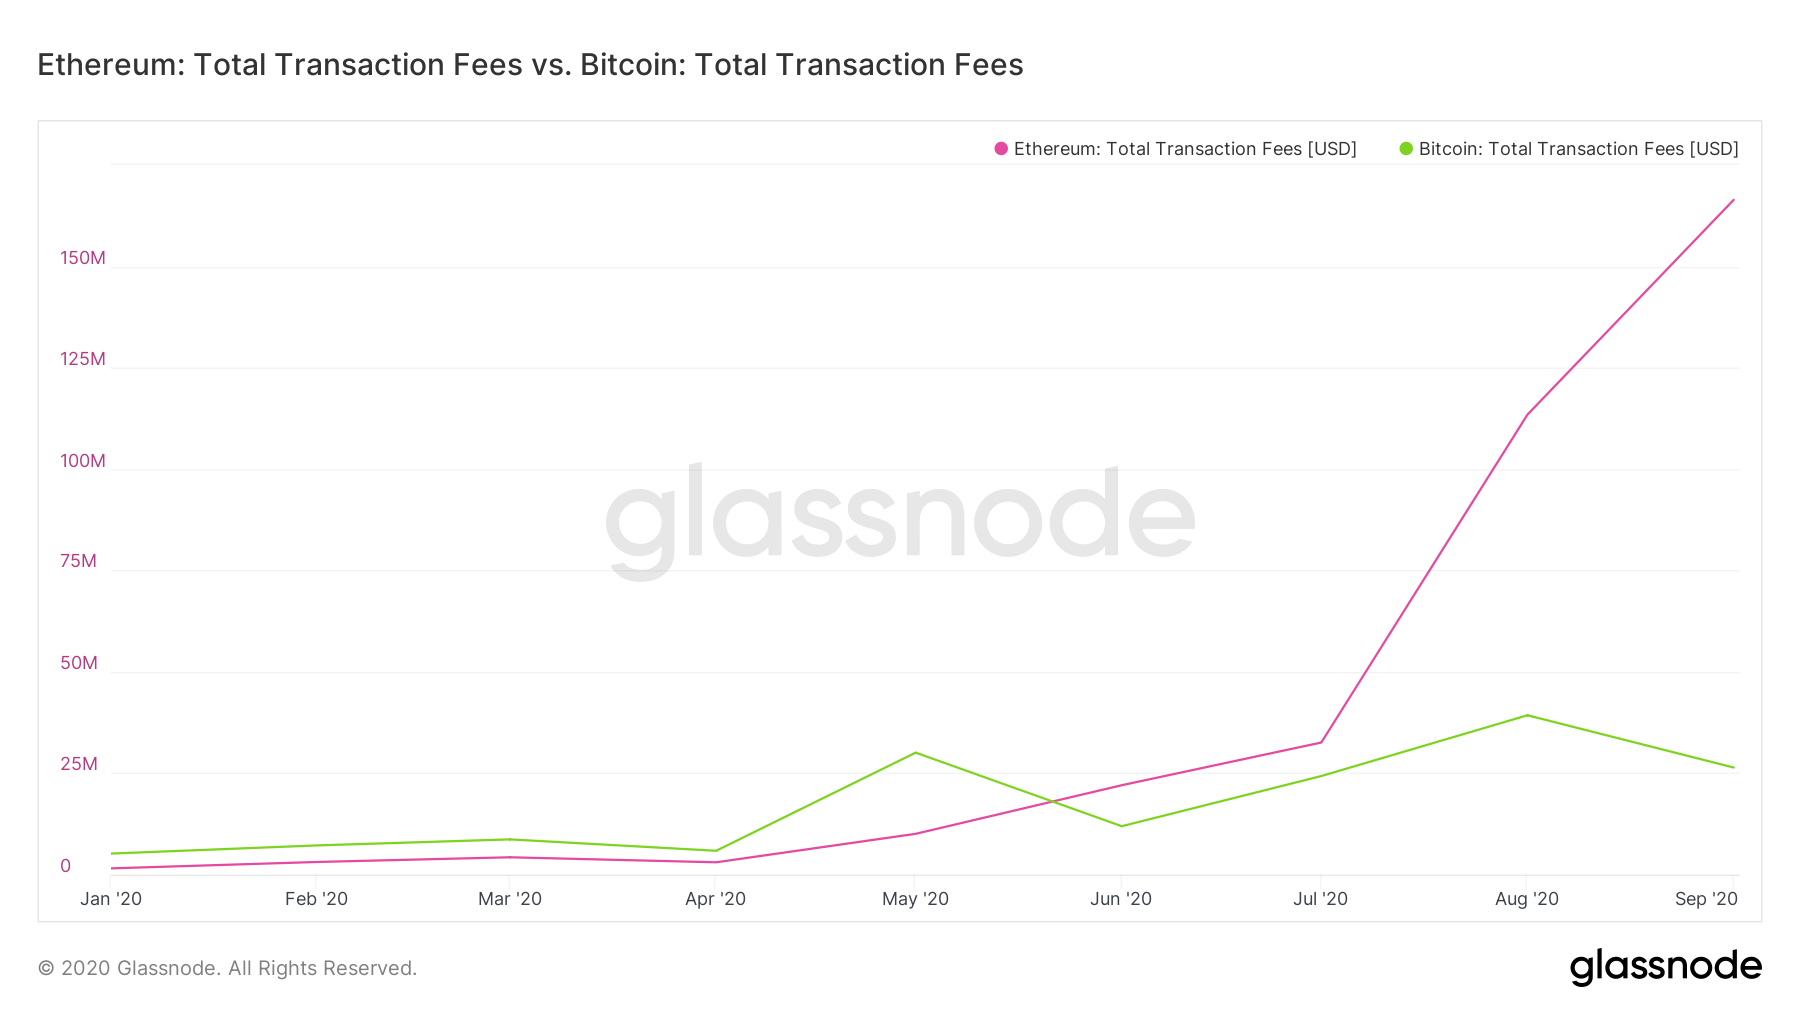 bitcoin vs ethereum transaction fee